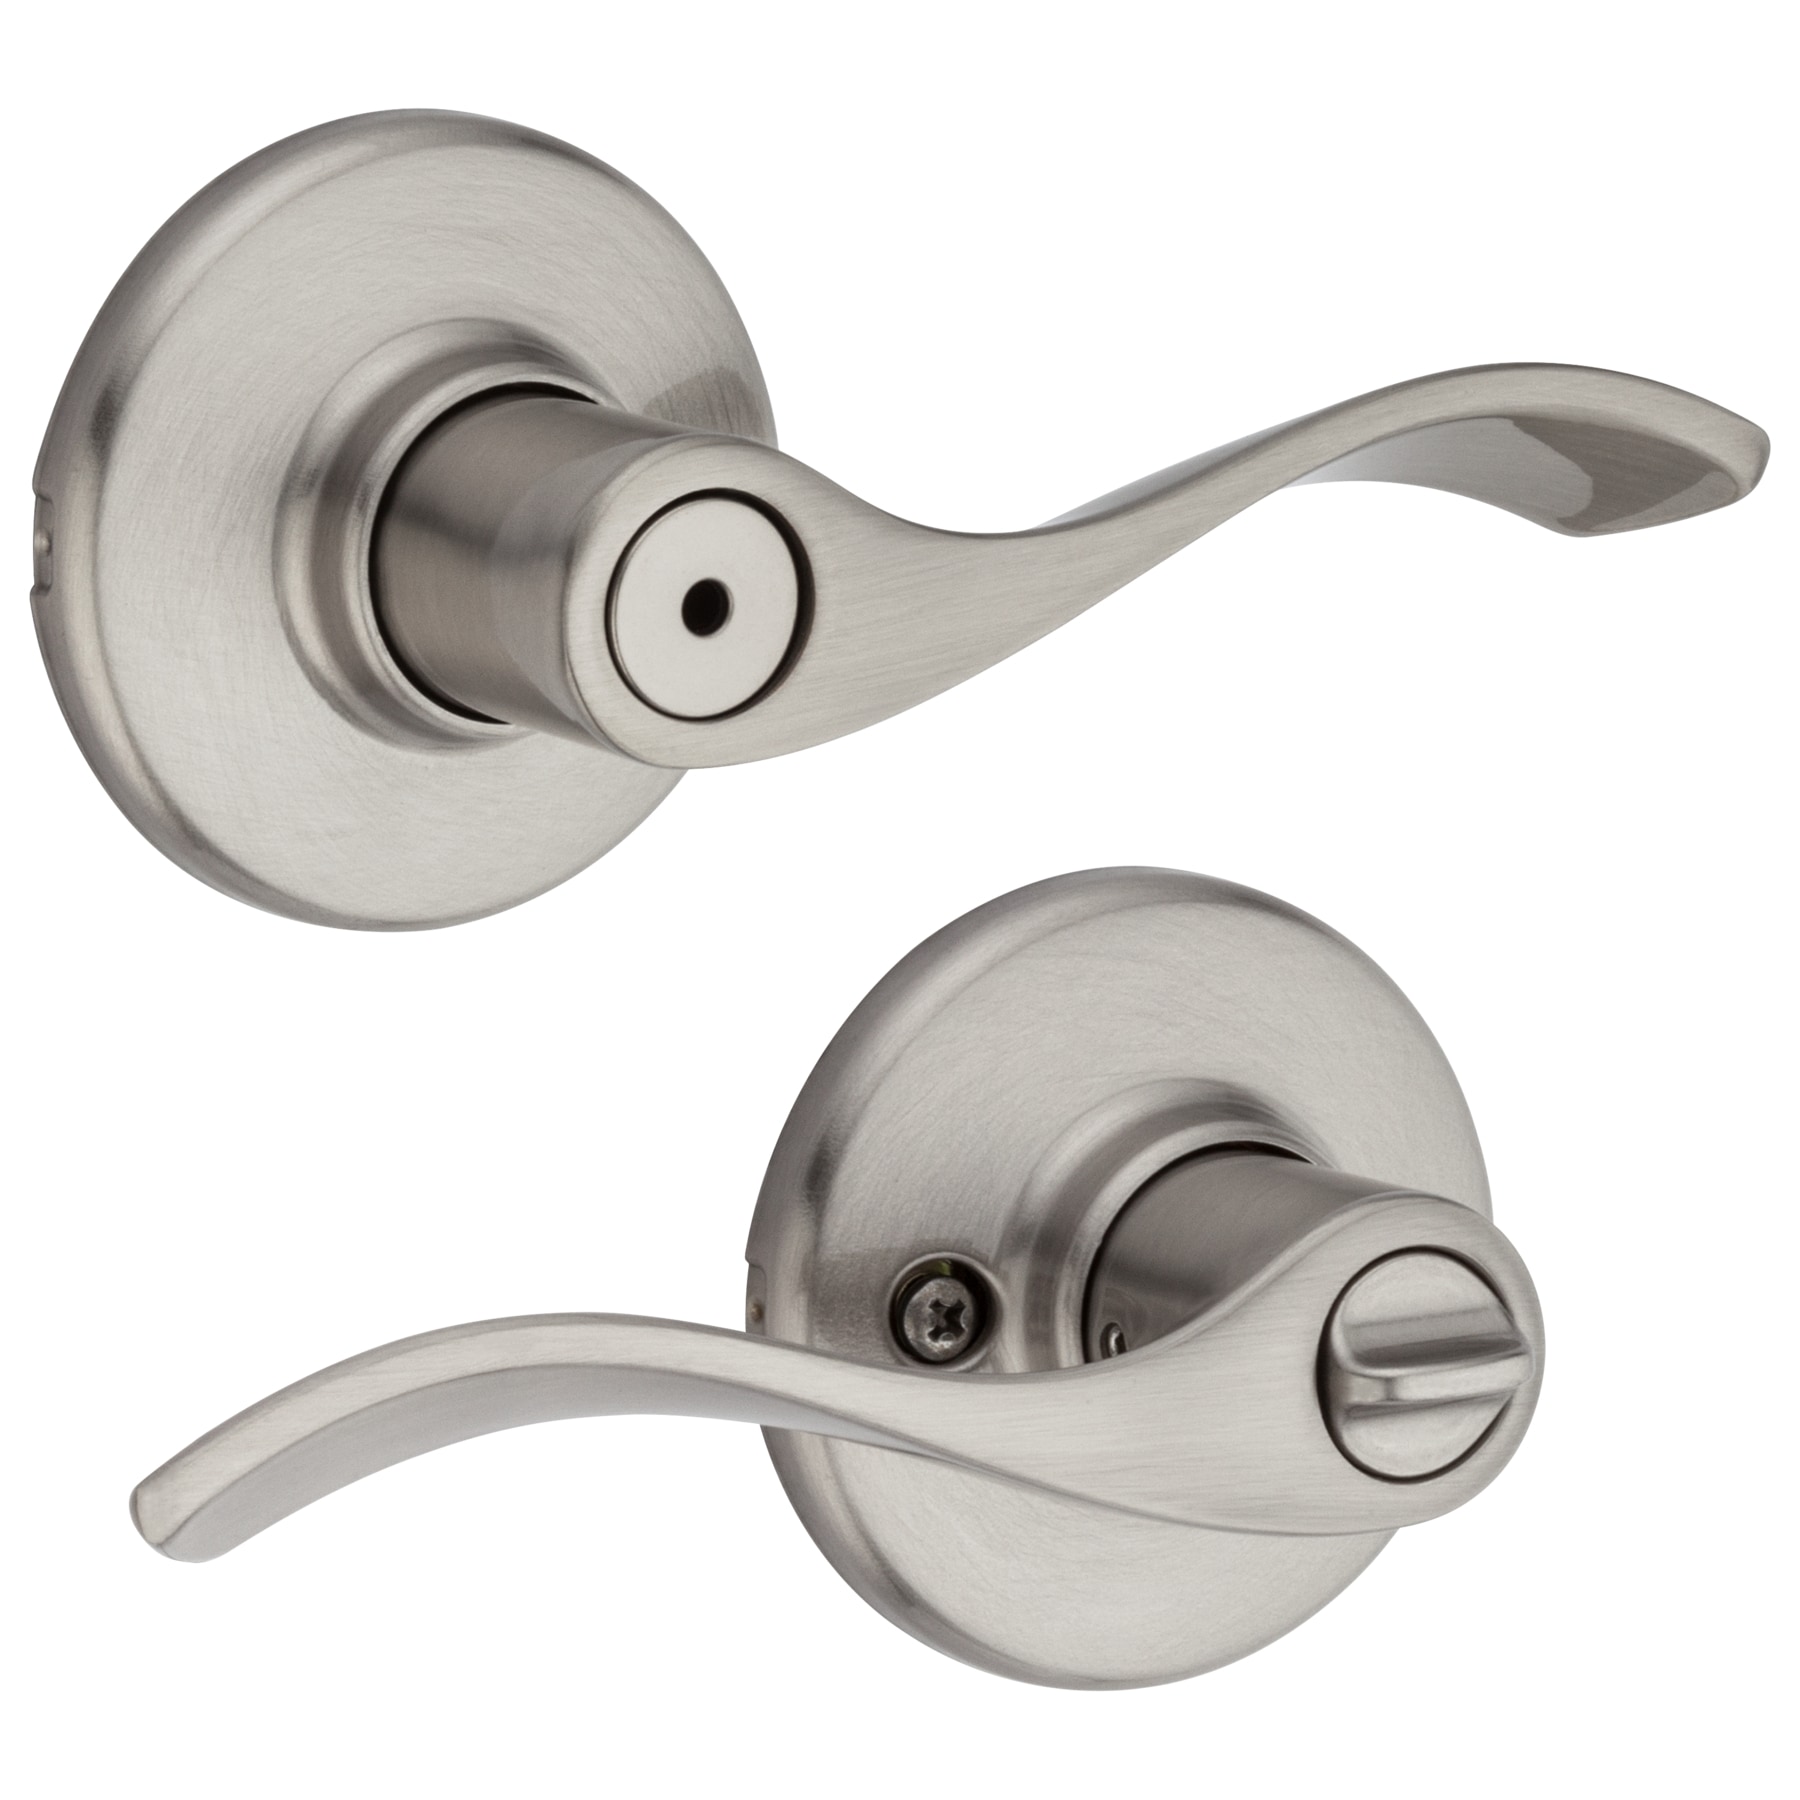 Privacy Polished Chrome Bedroom Bathroom Lever Handle Knob Door Lock lockset 